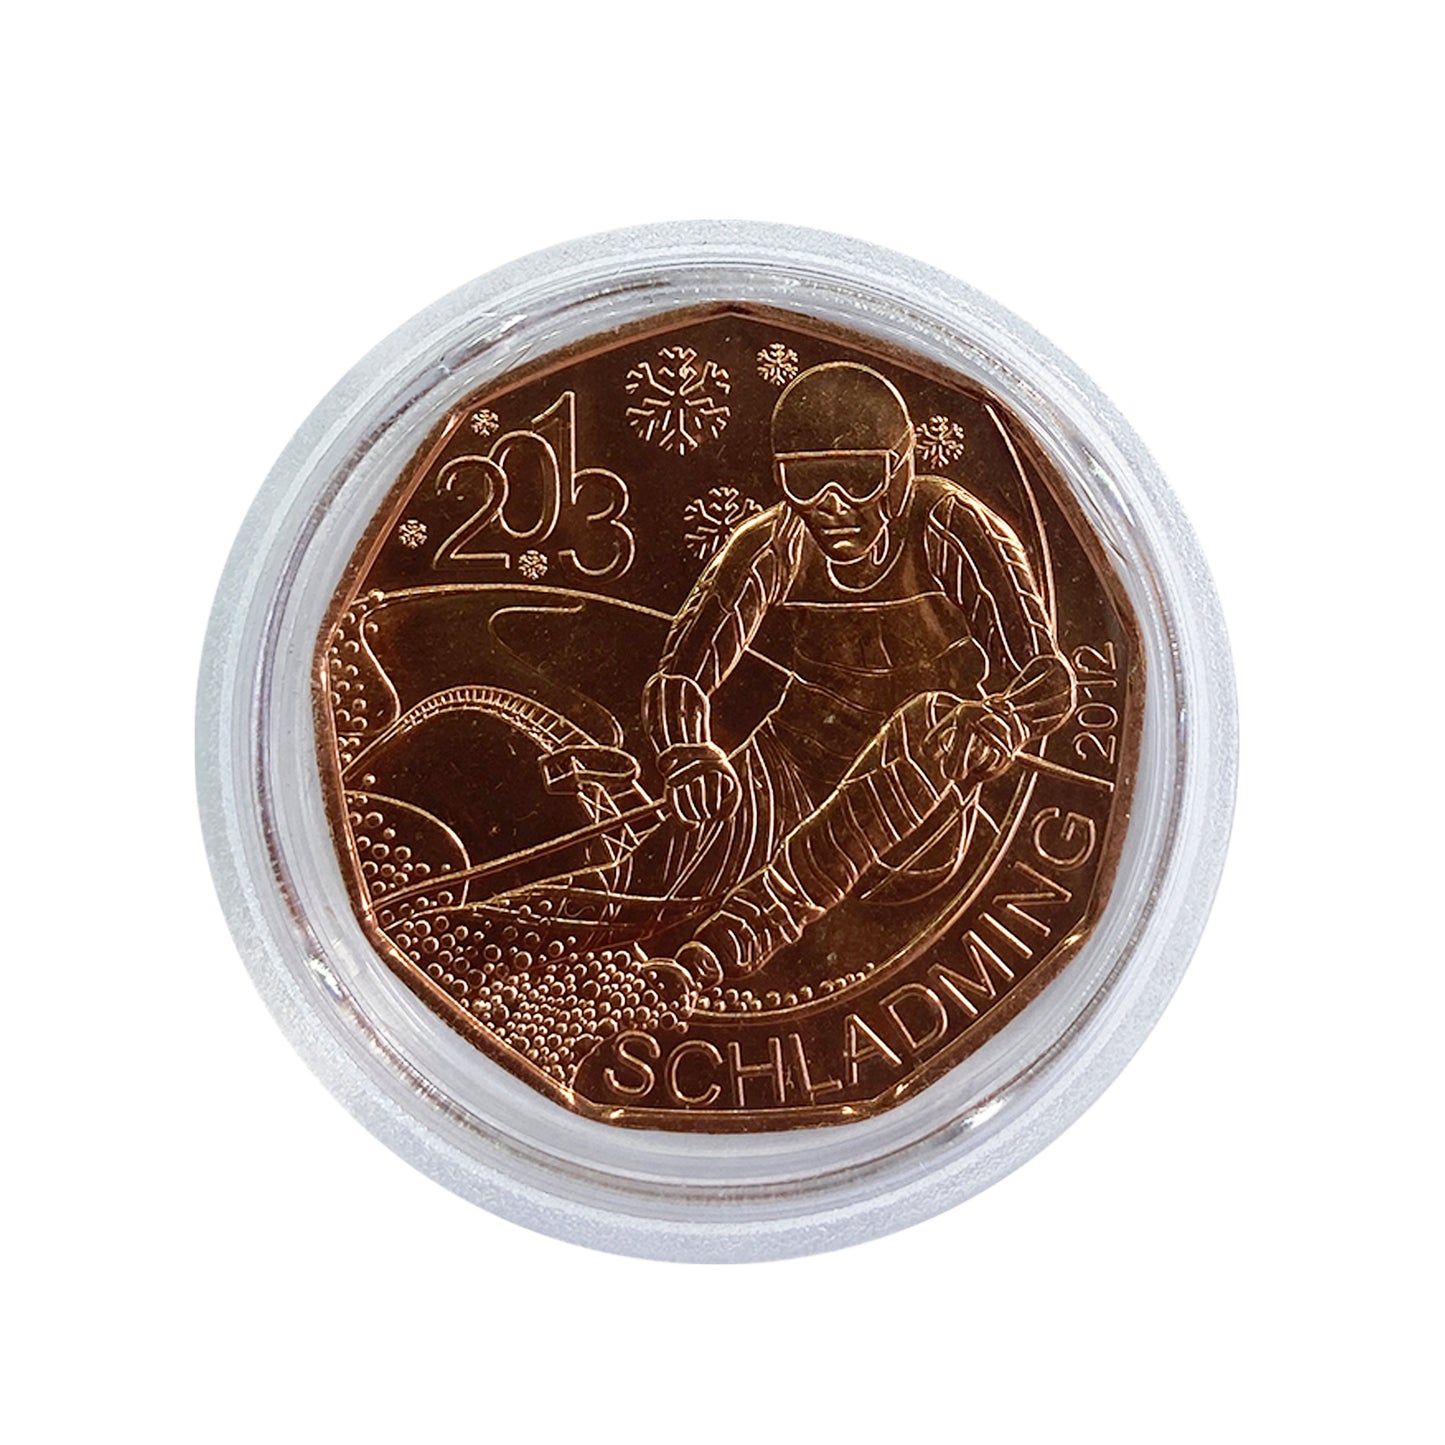 Austria - Moneda 5 euros cobre 2012 - Campeonato del Mundo de Esquí Schladming 2013